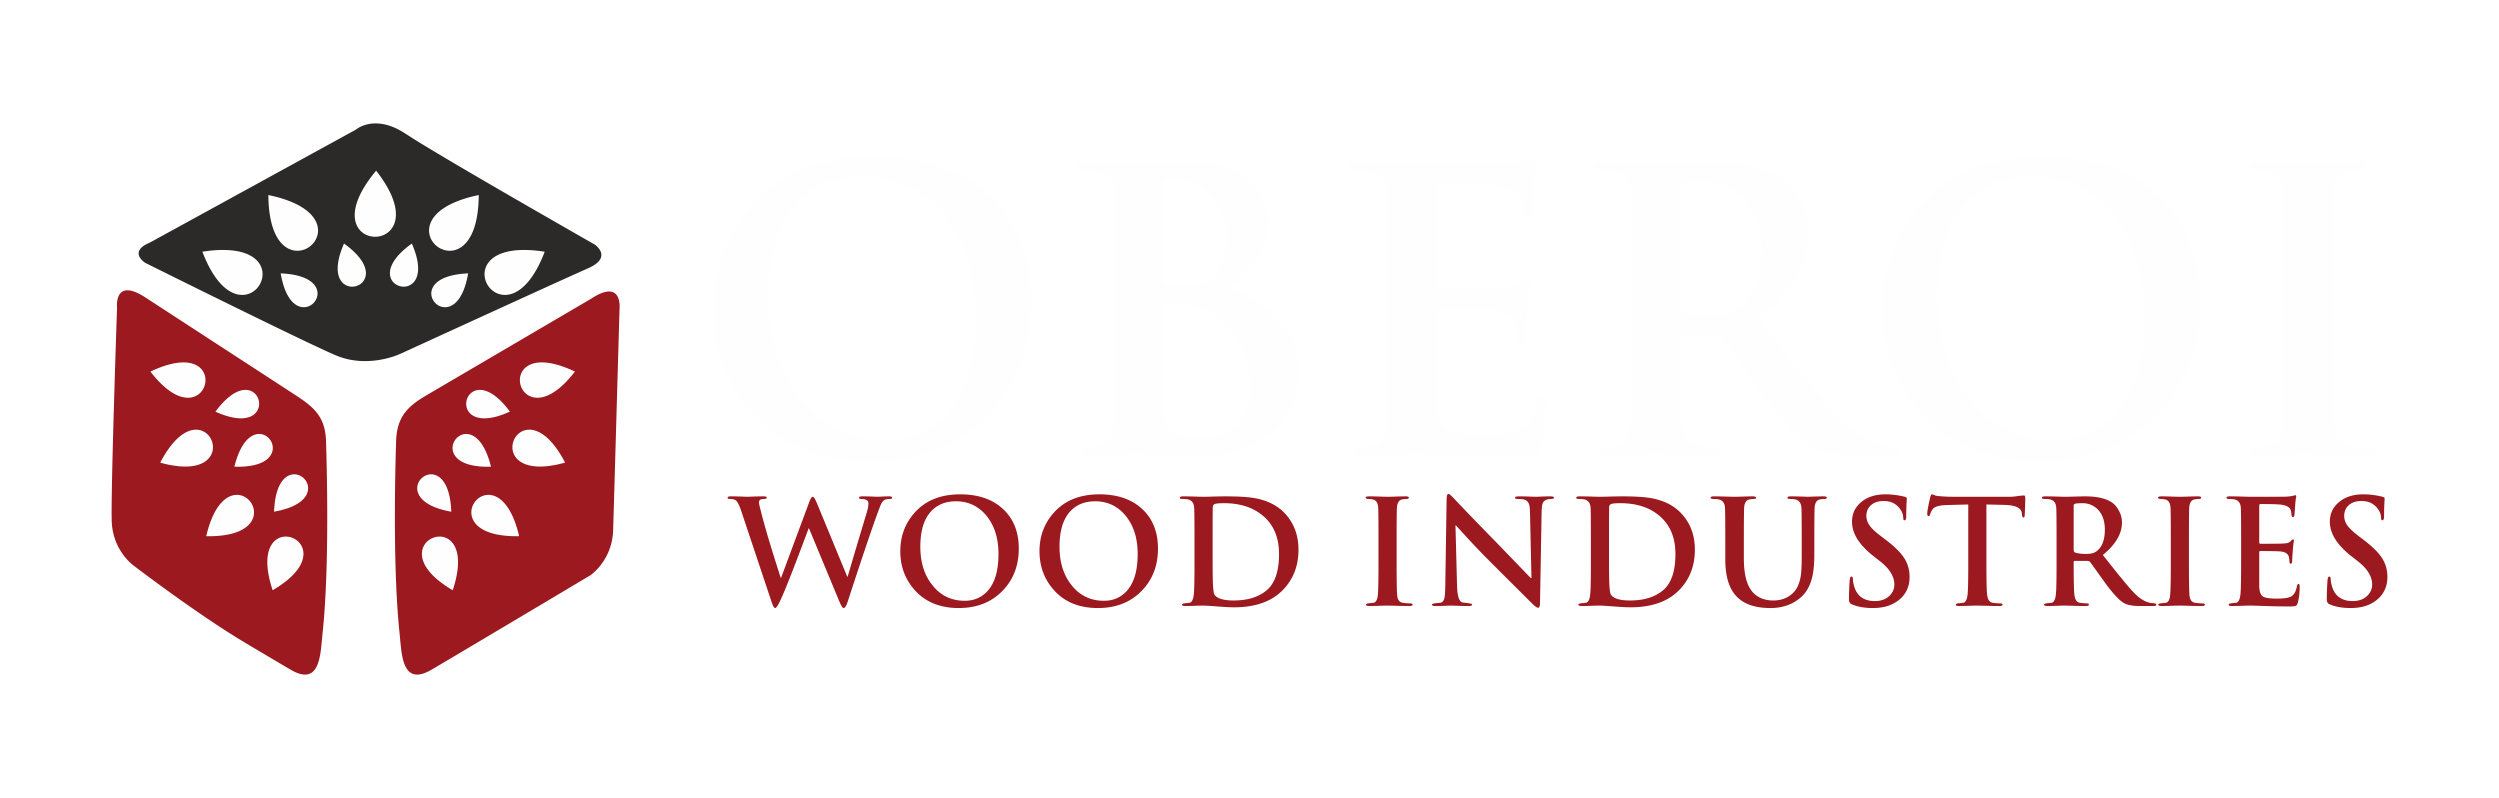 Oberoi Plywood Industrieseet